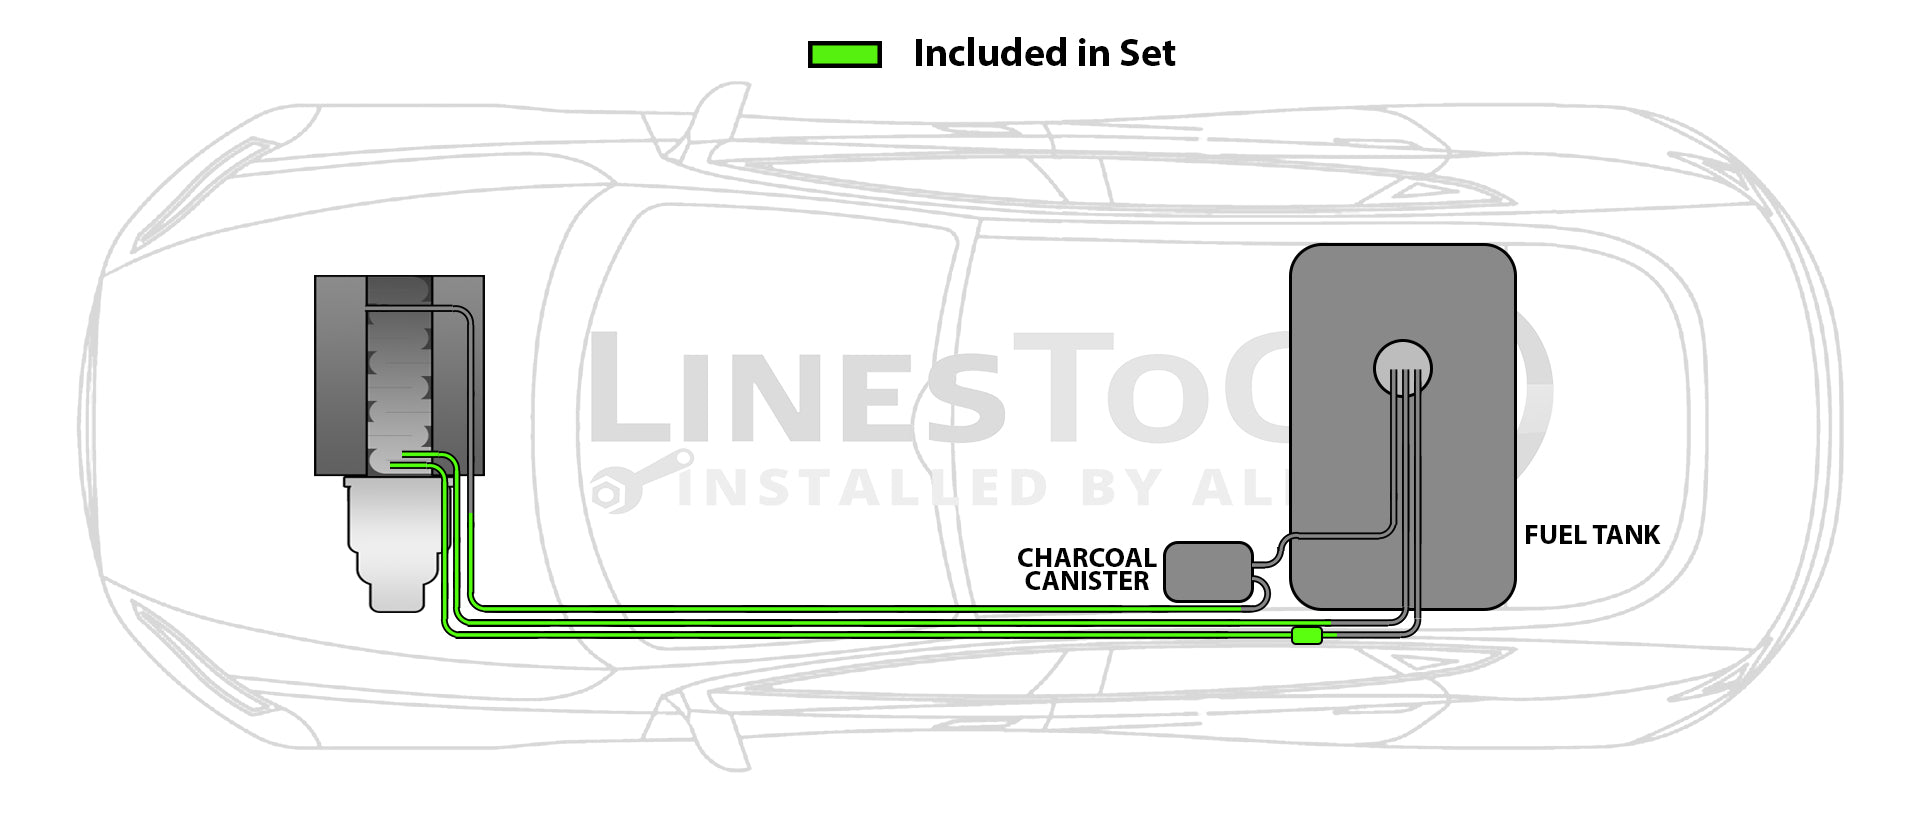 Buick LeSabre Limited Fuel Line Set 2002 3.8L FL251-A8C